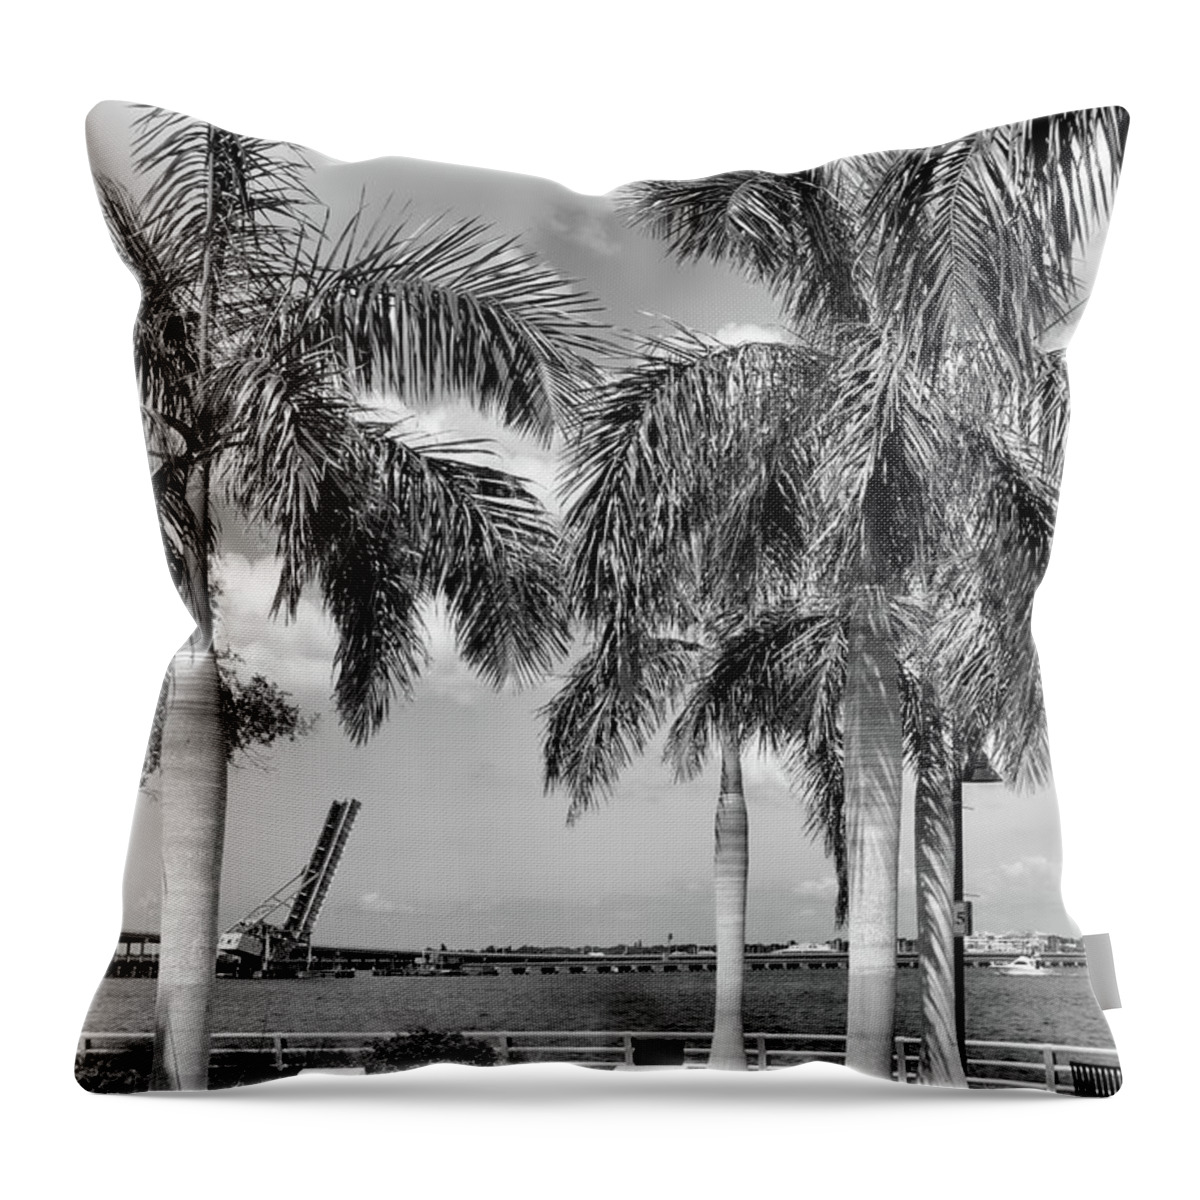 River Throw Pillow featuring the photograph Bridge Through the Palms by Robert Wilder Jr